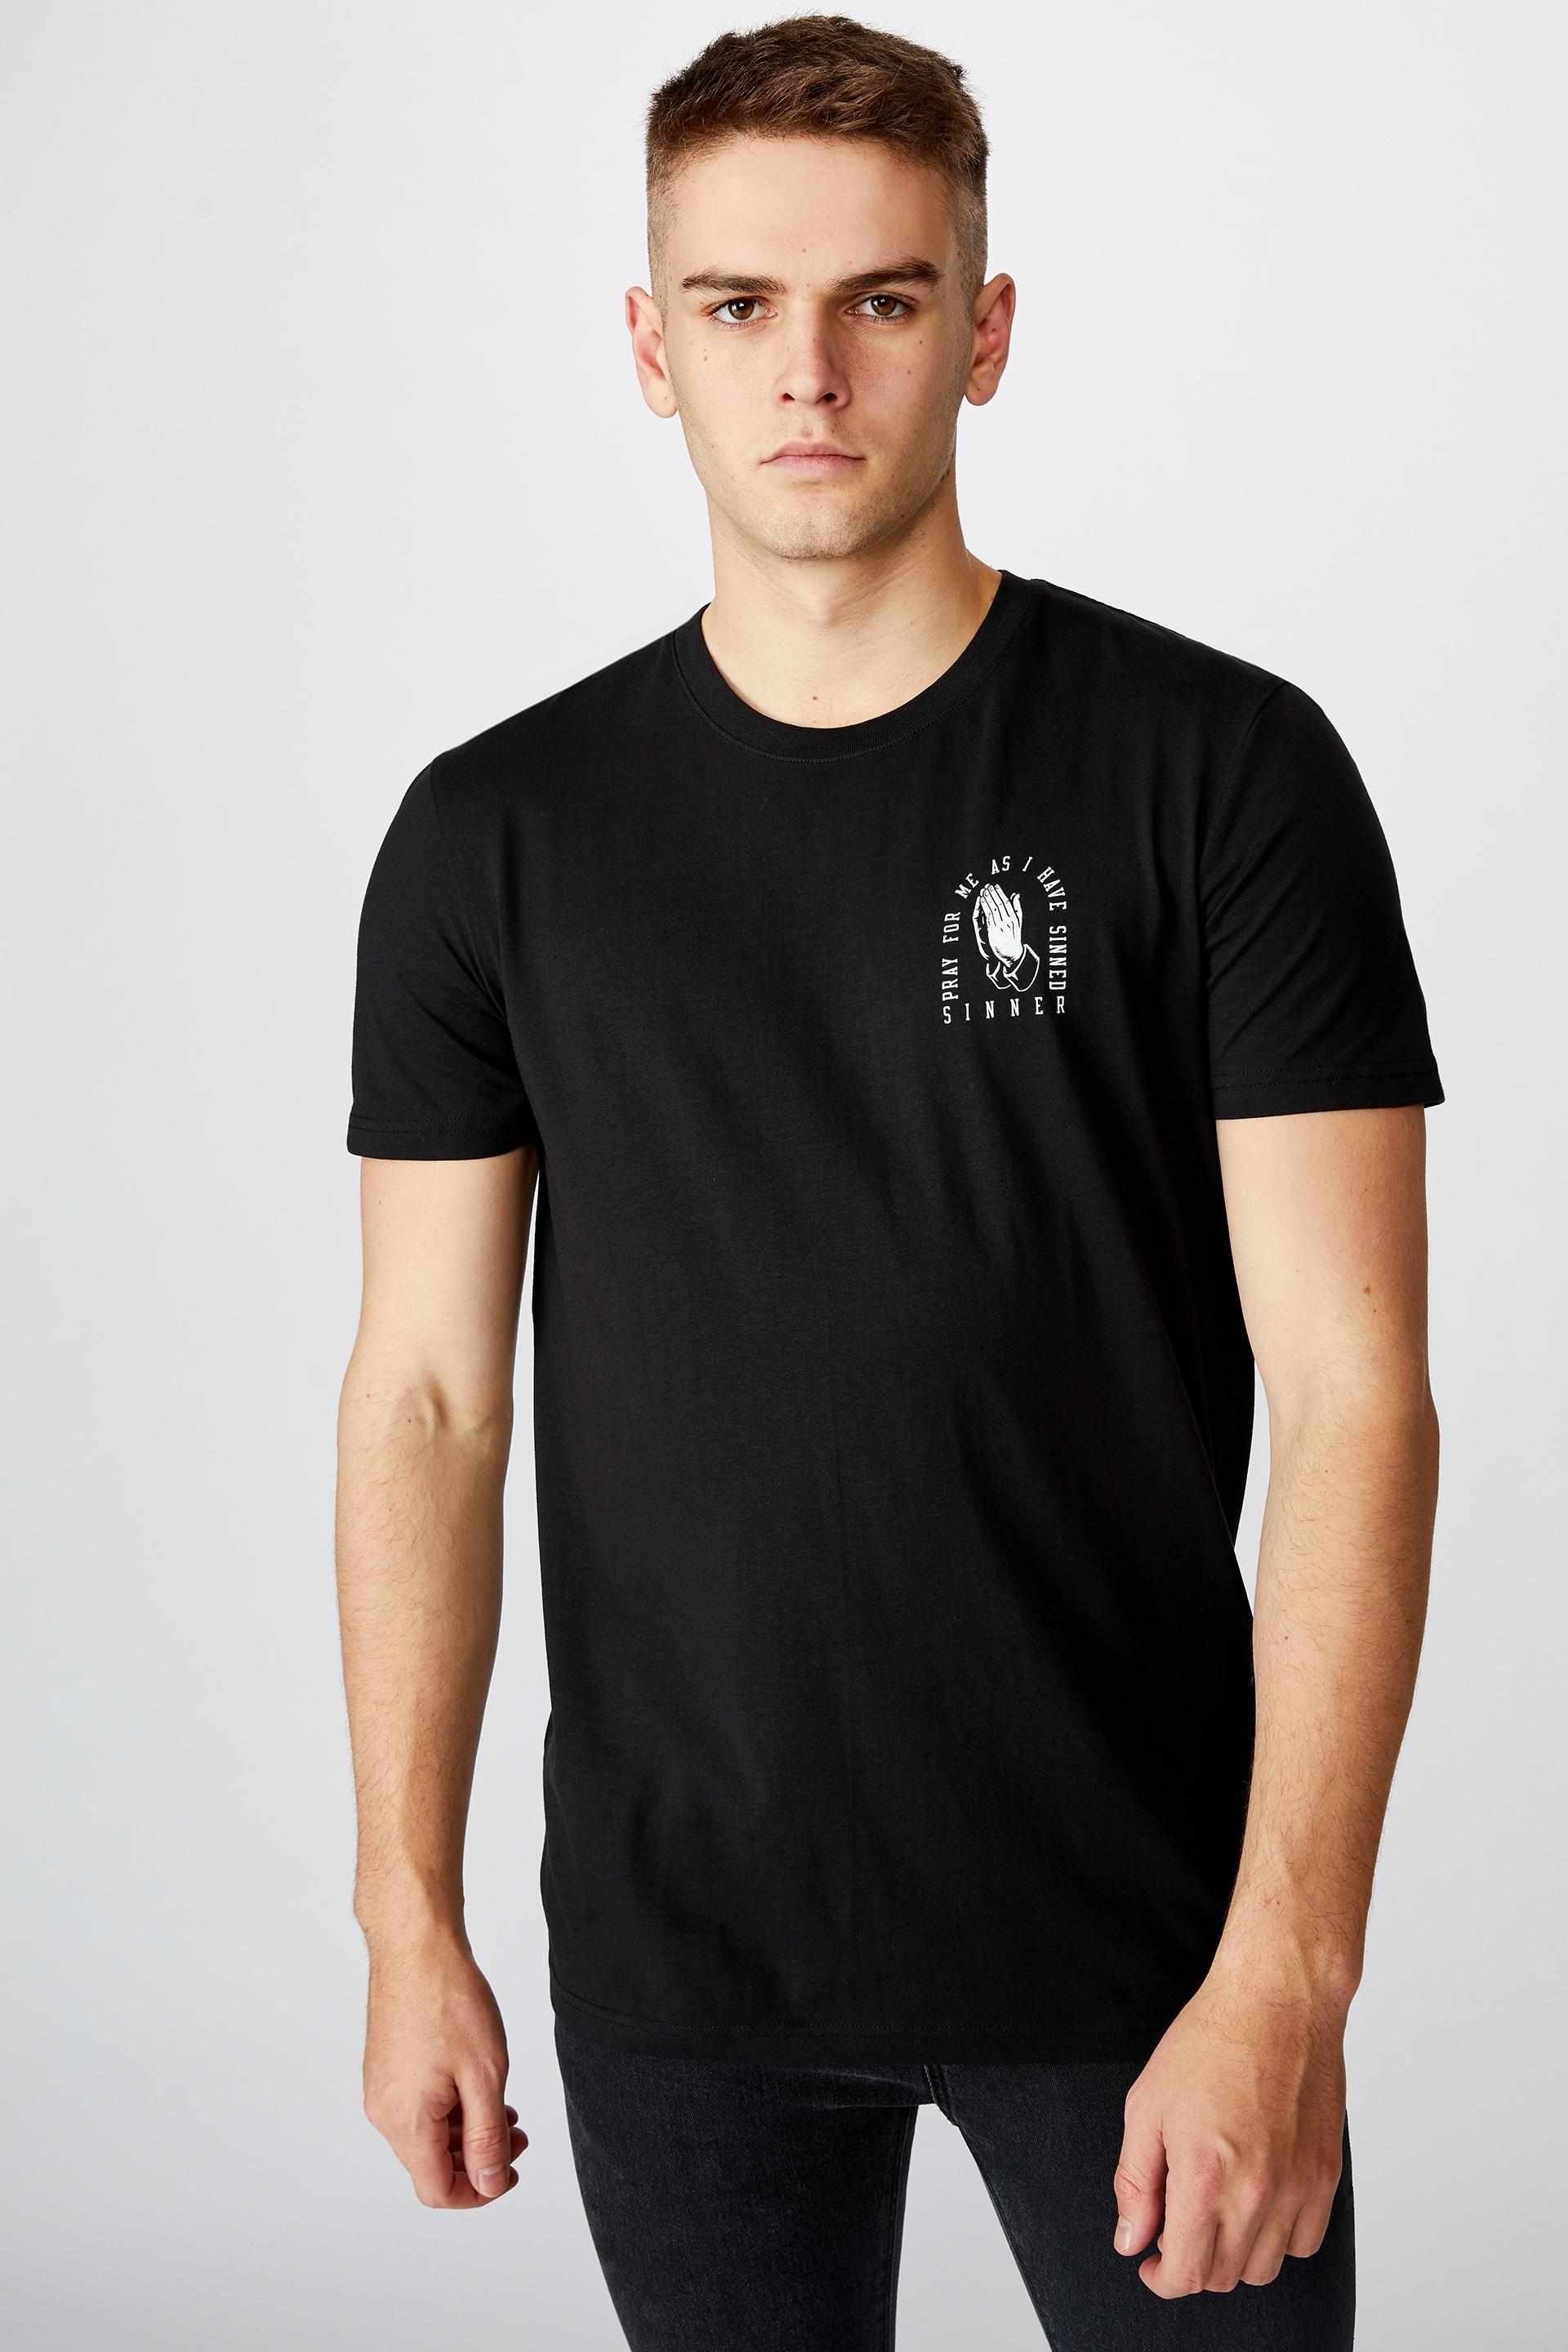 Sinner slim graphic t shirt - black Factorie T-Shirts & Vests ...